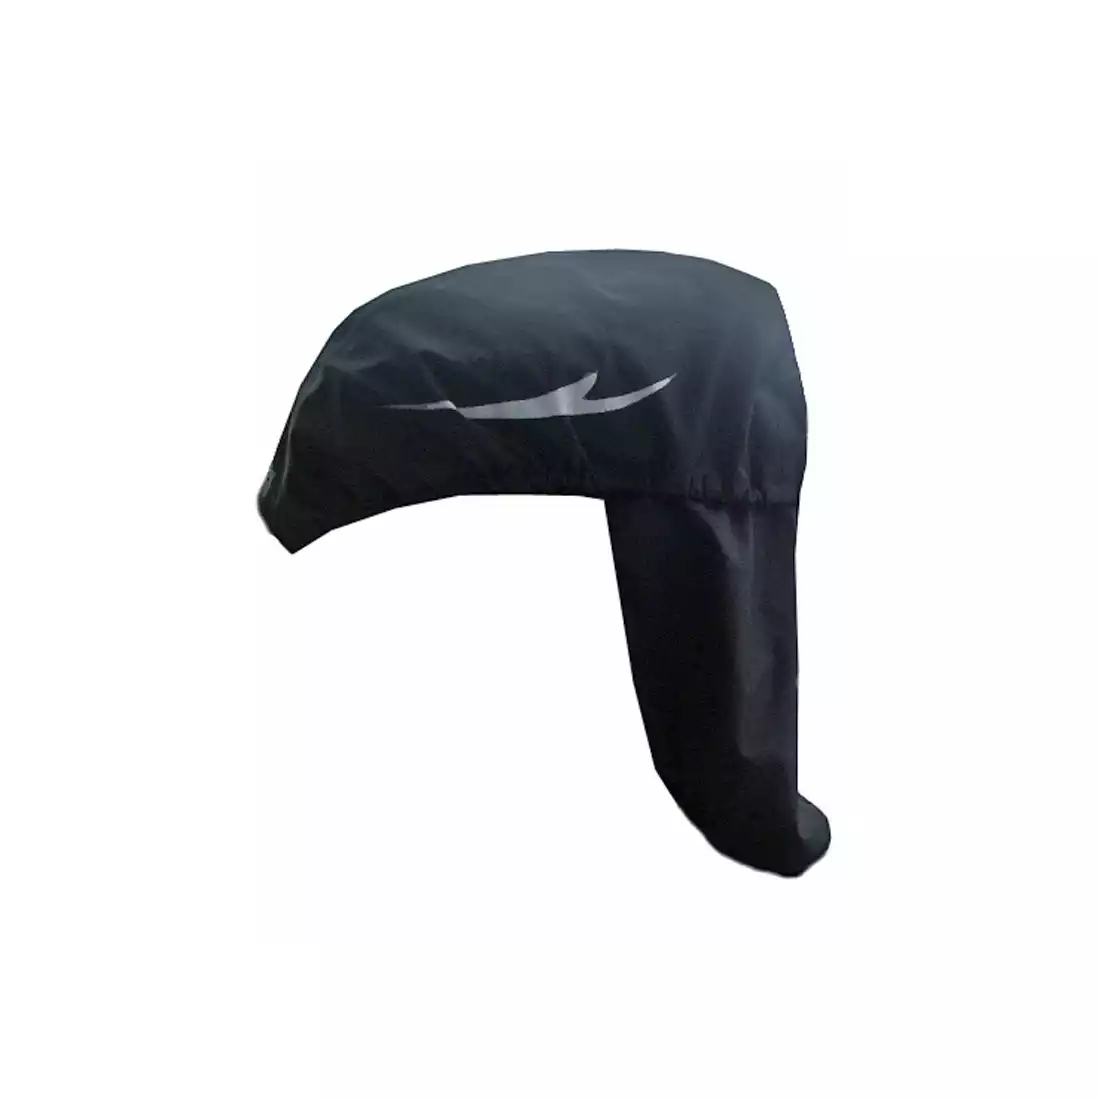 CHIBA SS19 RAINCOVER PRO 31423 helmet rain protector black | MikeSPORT